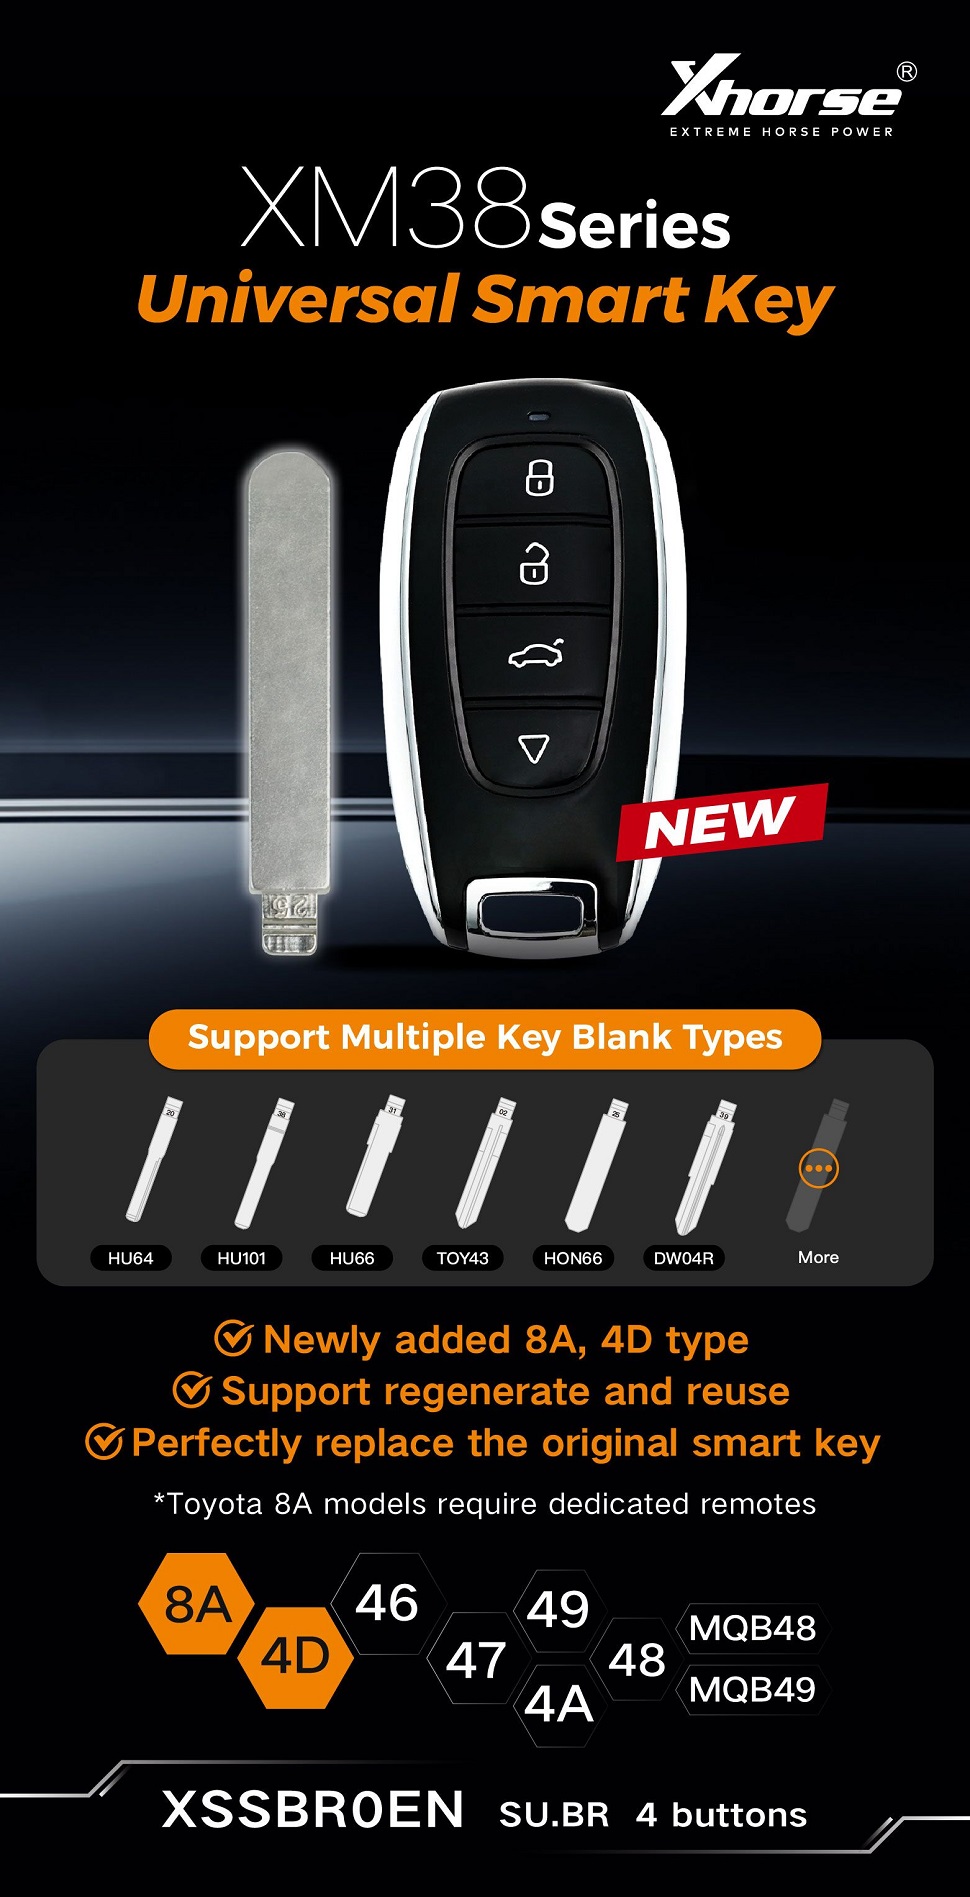 XHORSE XXSSBR0EN SU.BR Style 4 Buttons XM38 Series Universal Smart Key 5pcs/lot